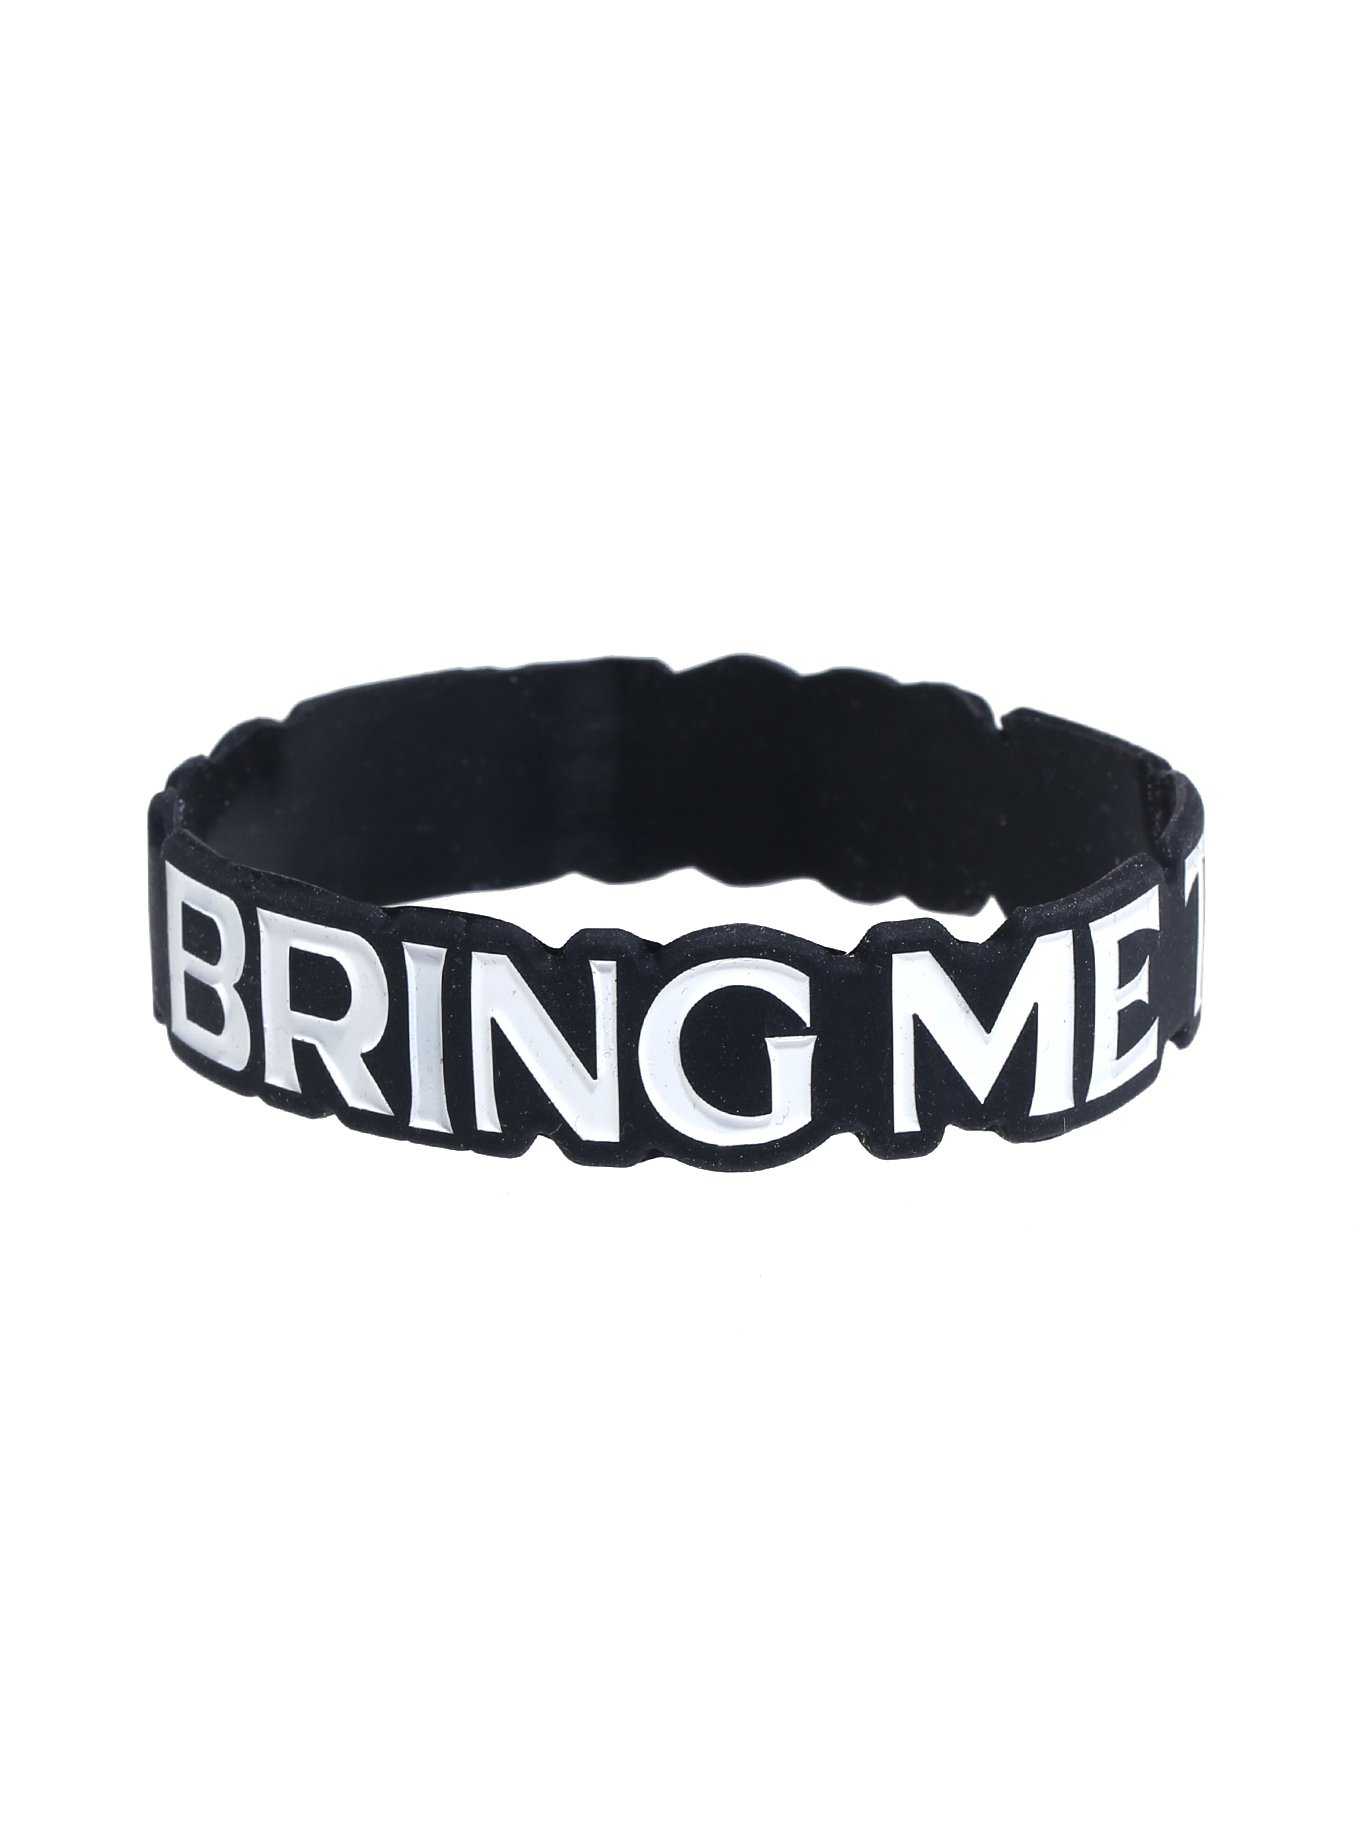 Bring Me The Horizon Logo Rubber Bracelet, , hi-res